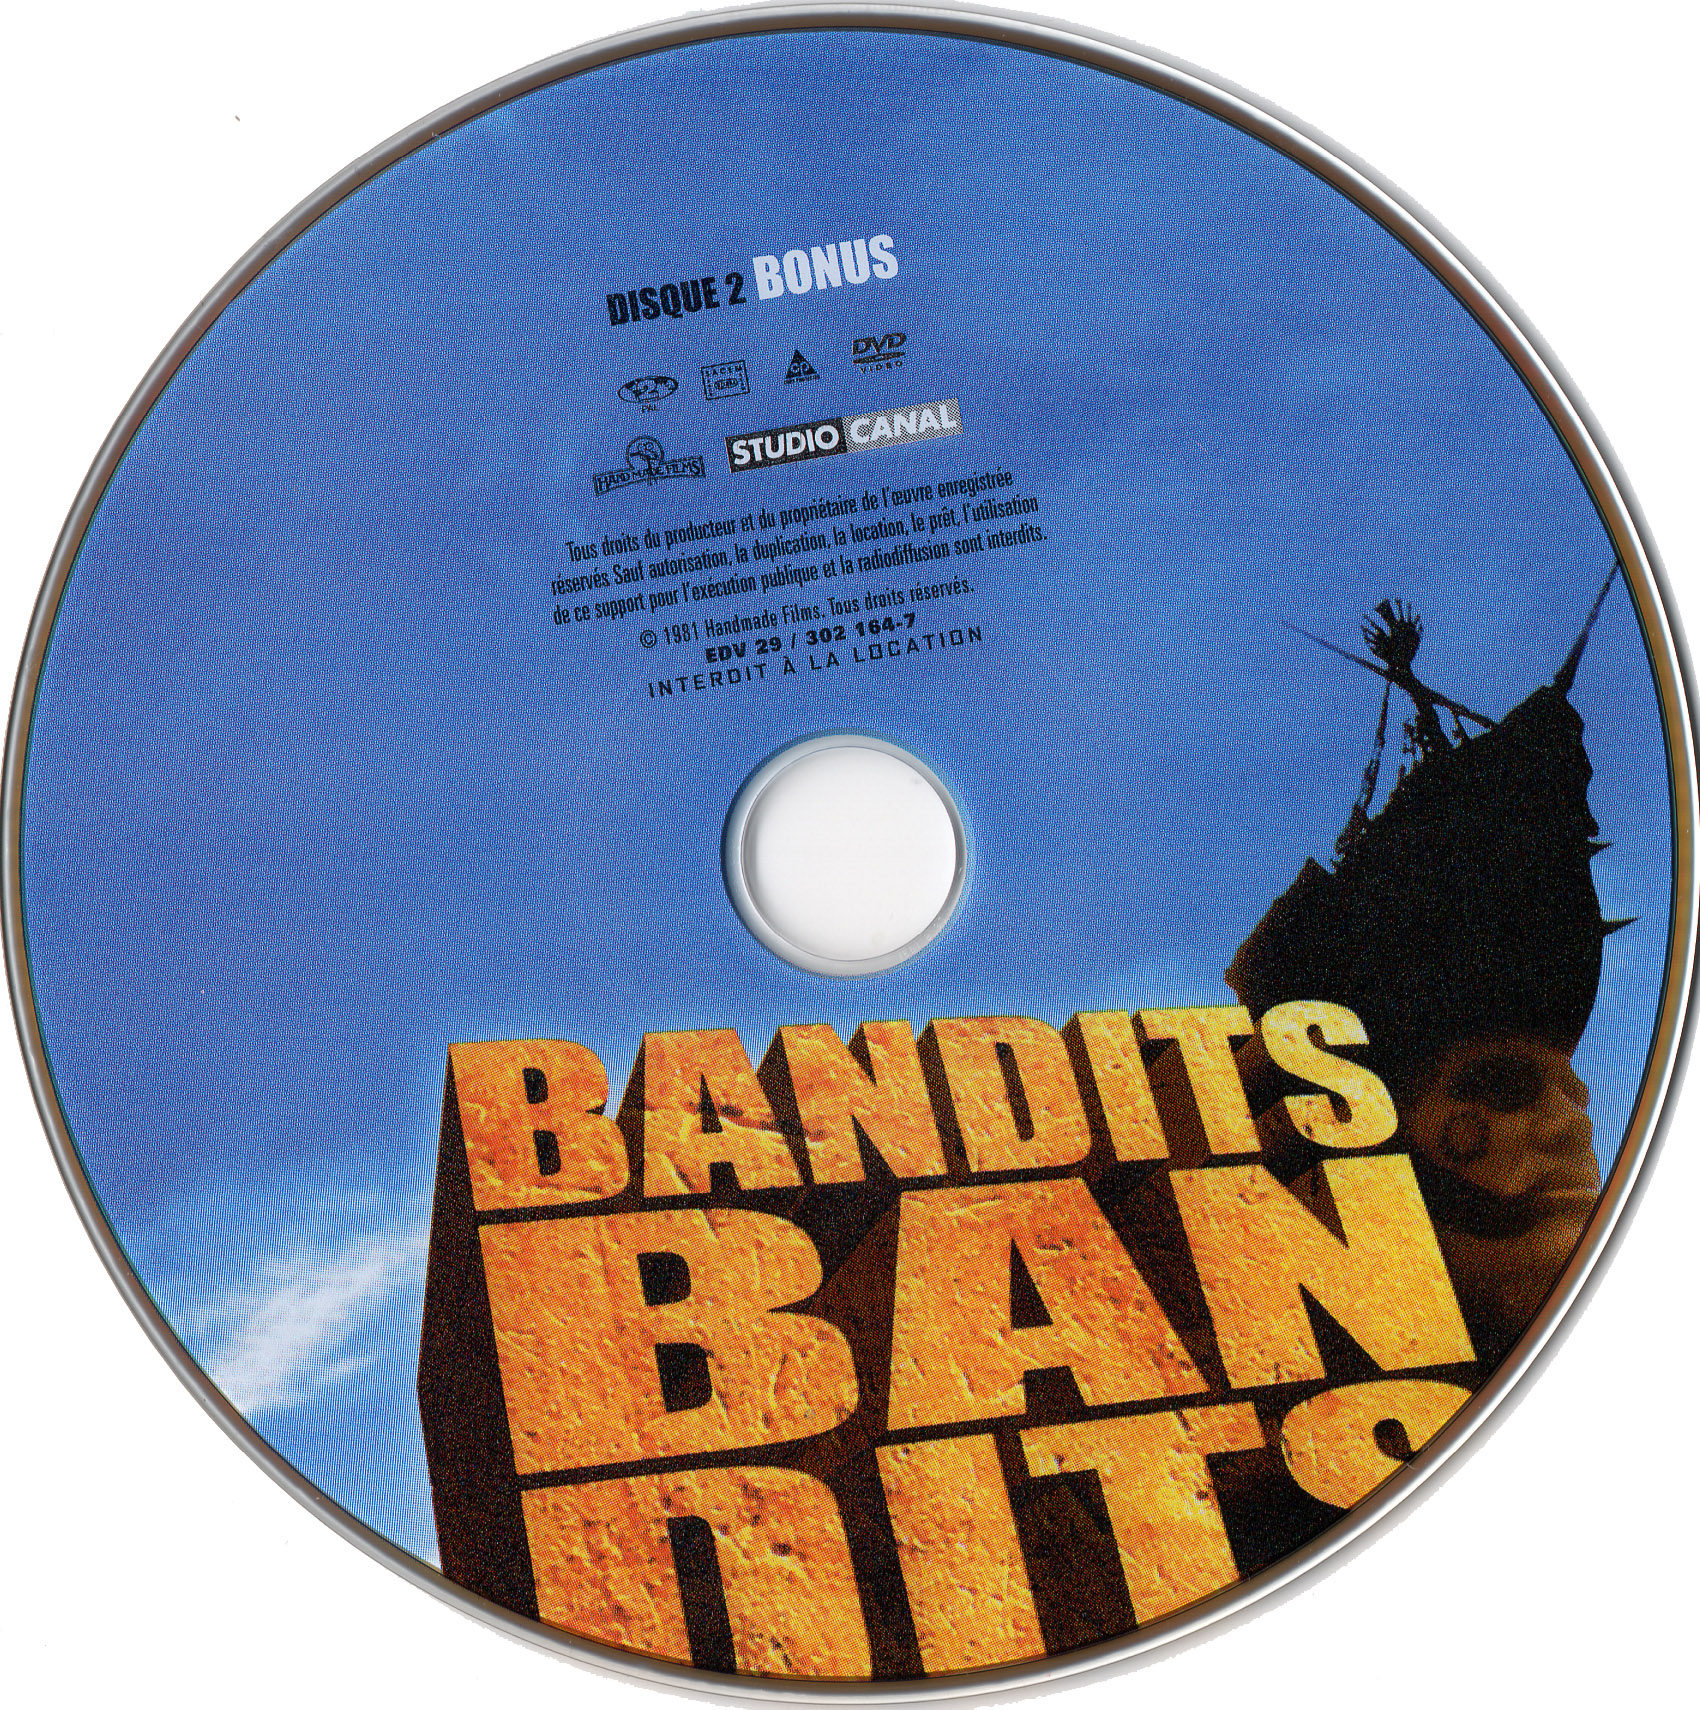 Bandits bandits DISC 2